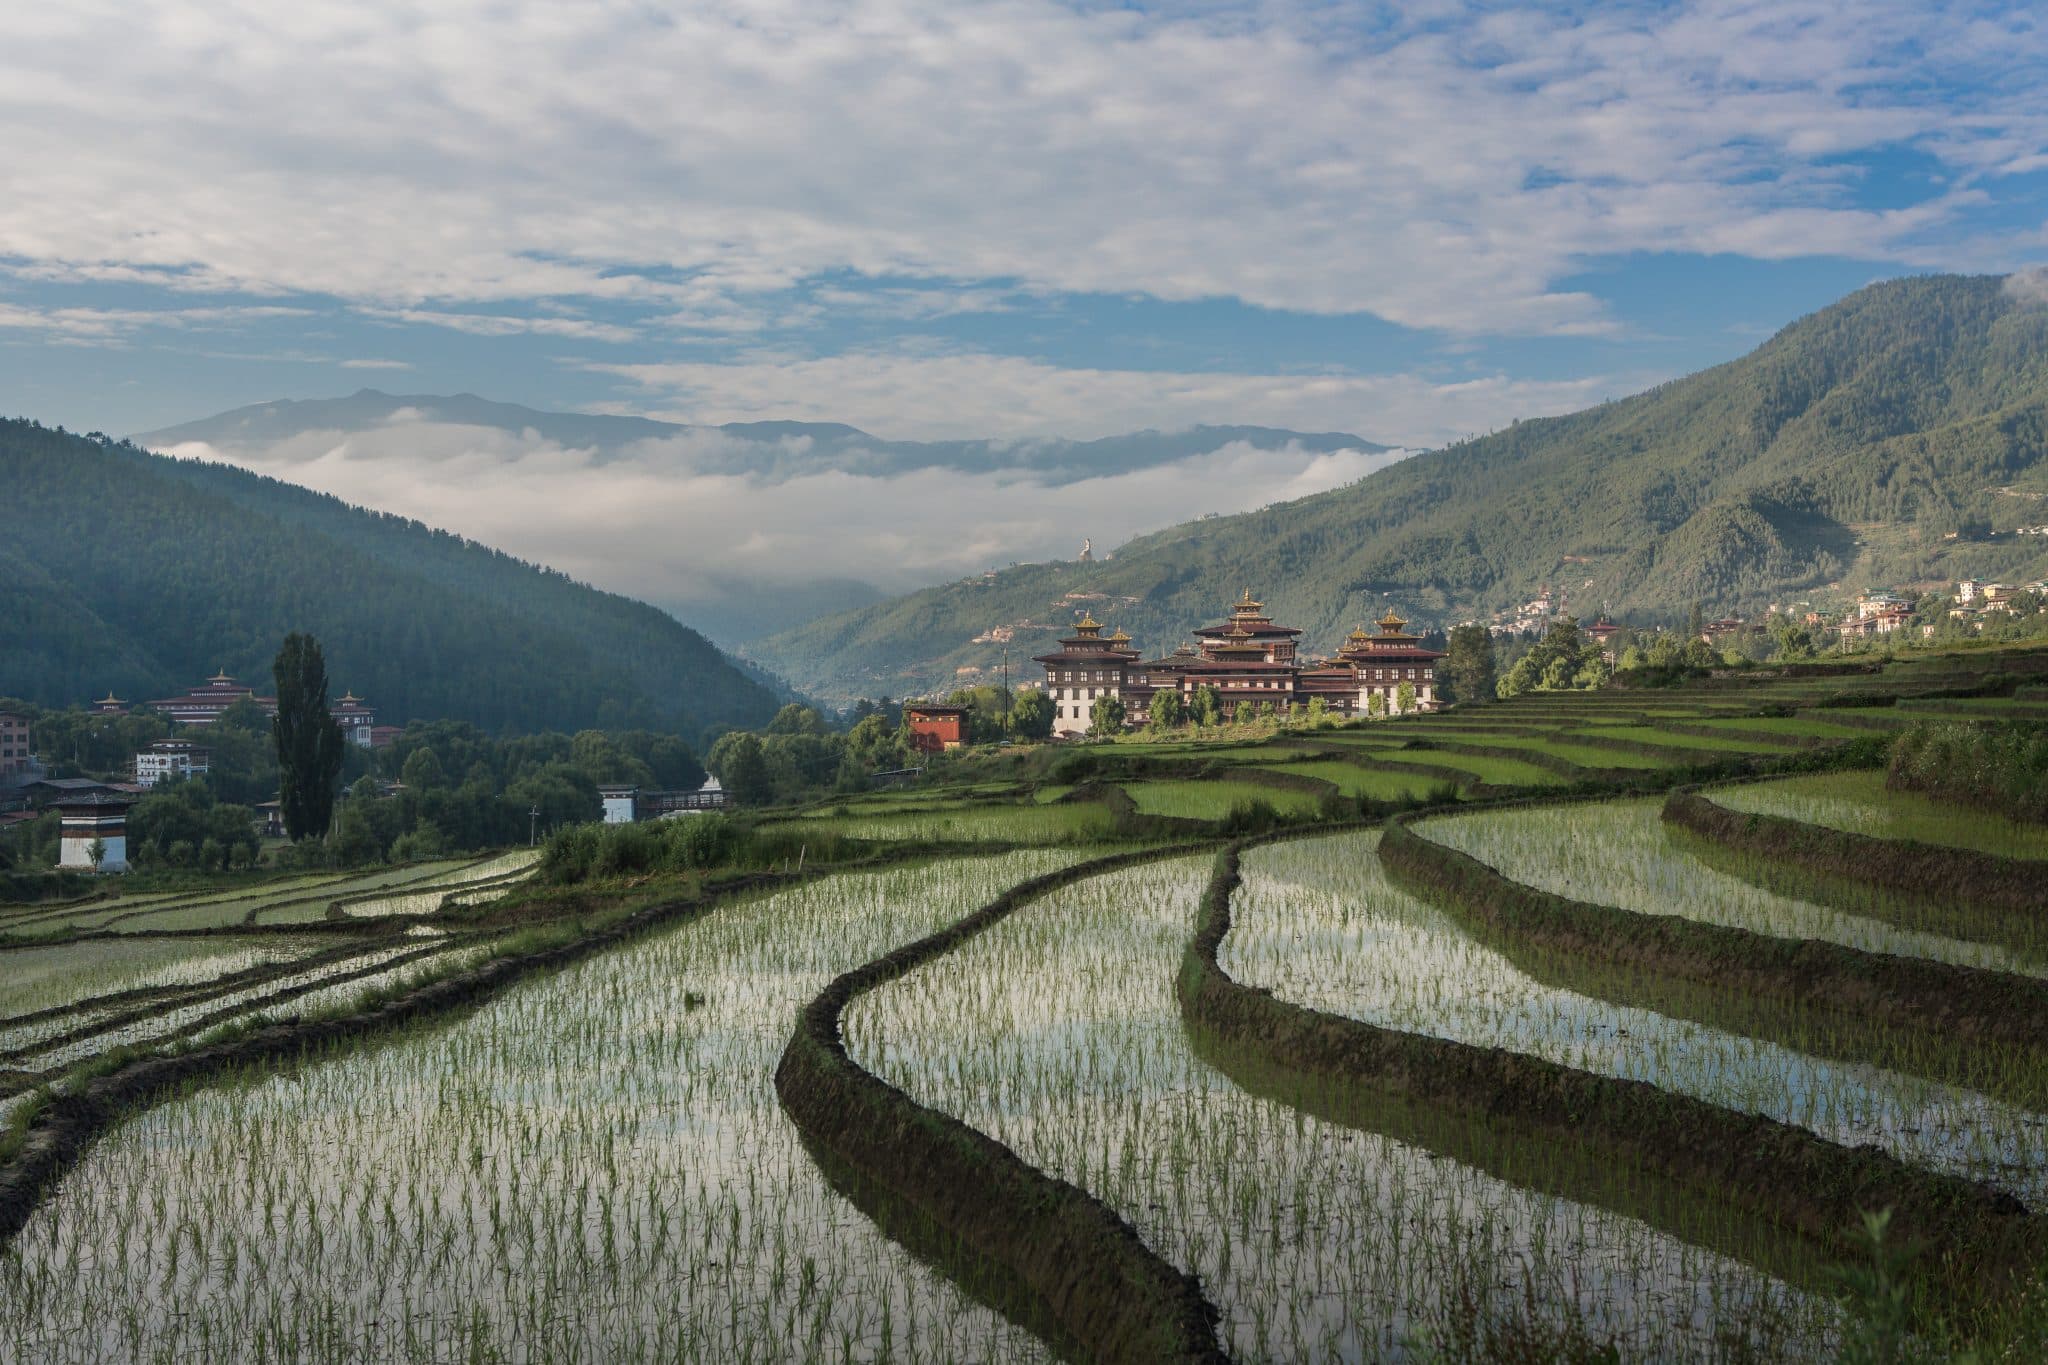 We're traveling to Bhutan - Rice paddies in Bhutan from Gray Langur Tours